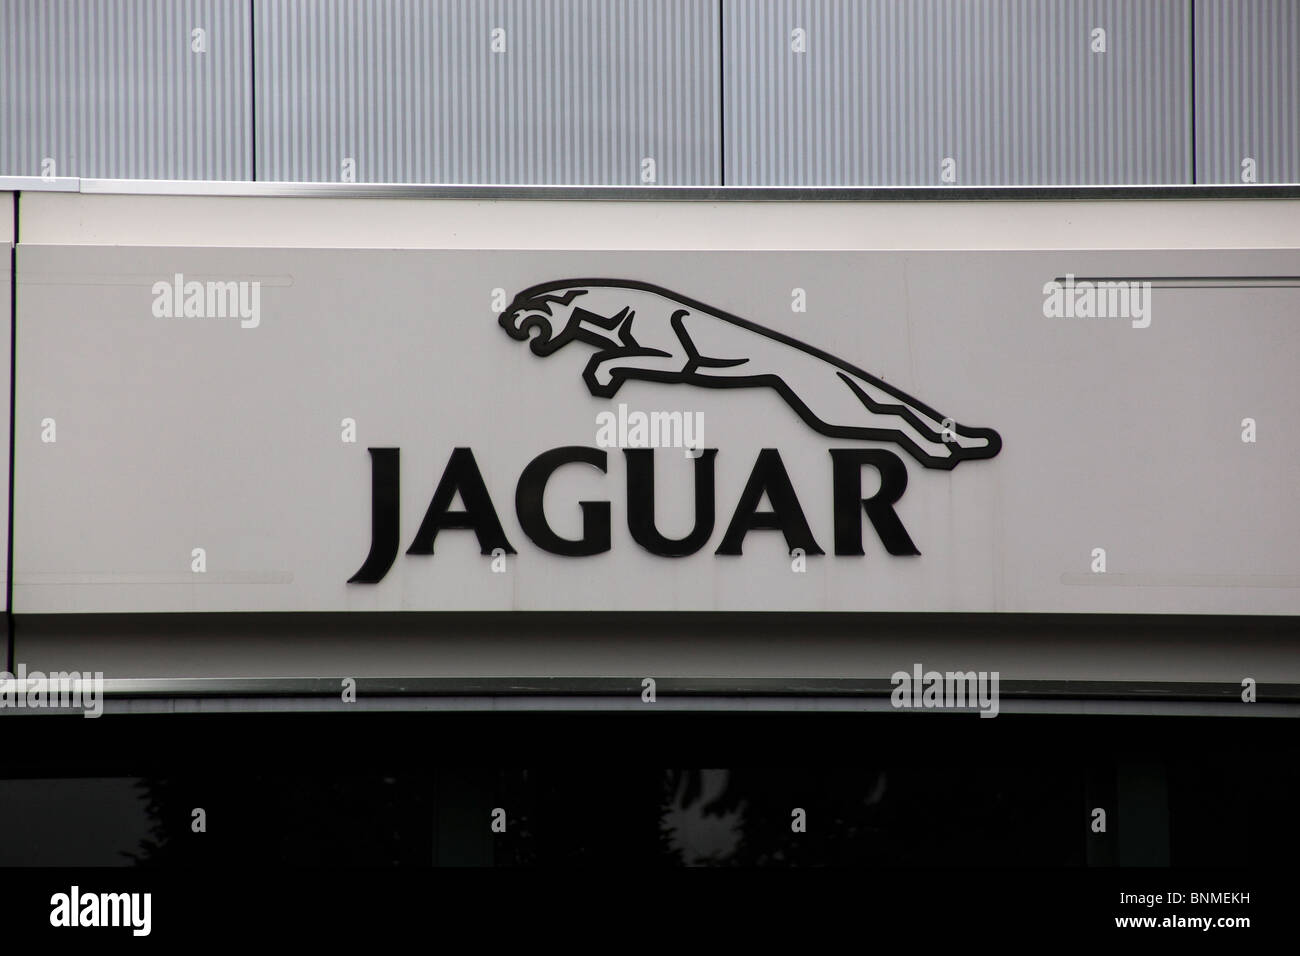 Jaguar Emblem at a showroom in th U.K. Stock Photo